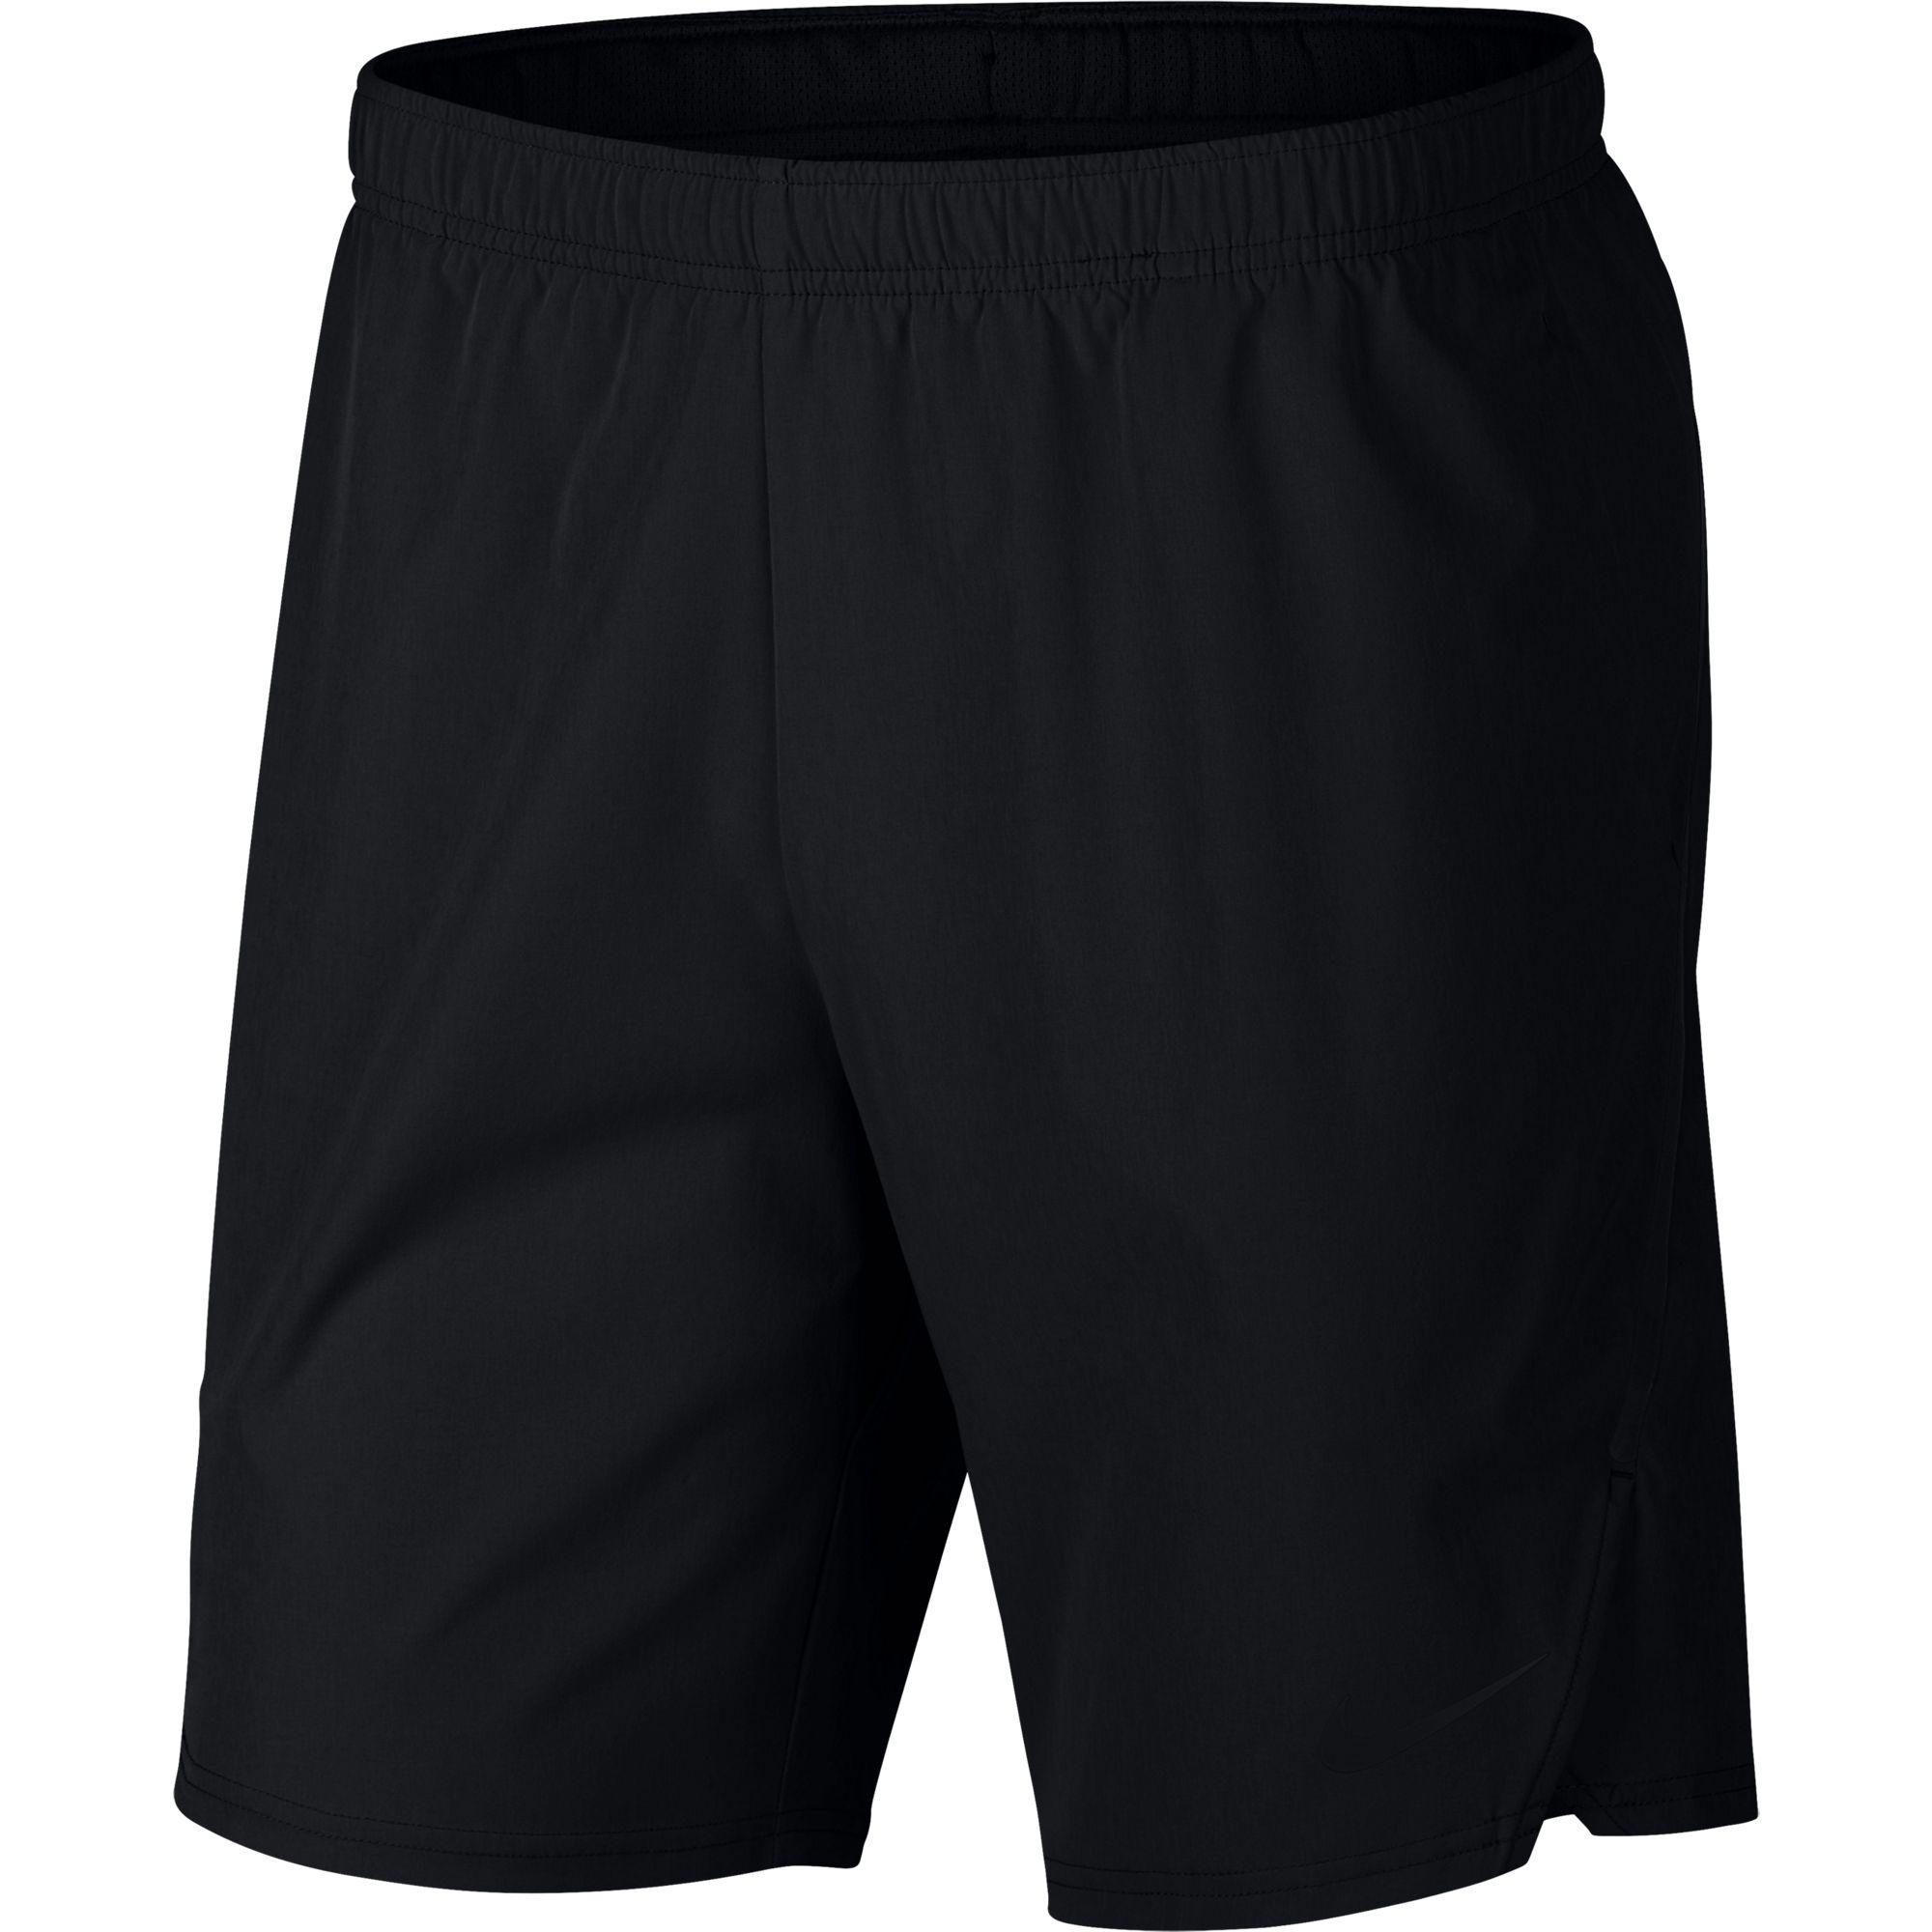 Nike Mens Flex Ace 9 Inch Shorts - Black/White - Tennisnuts.com